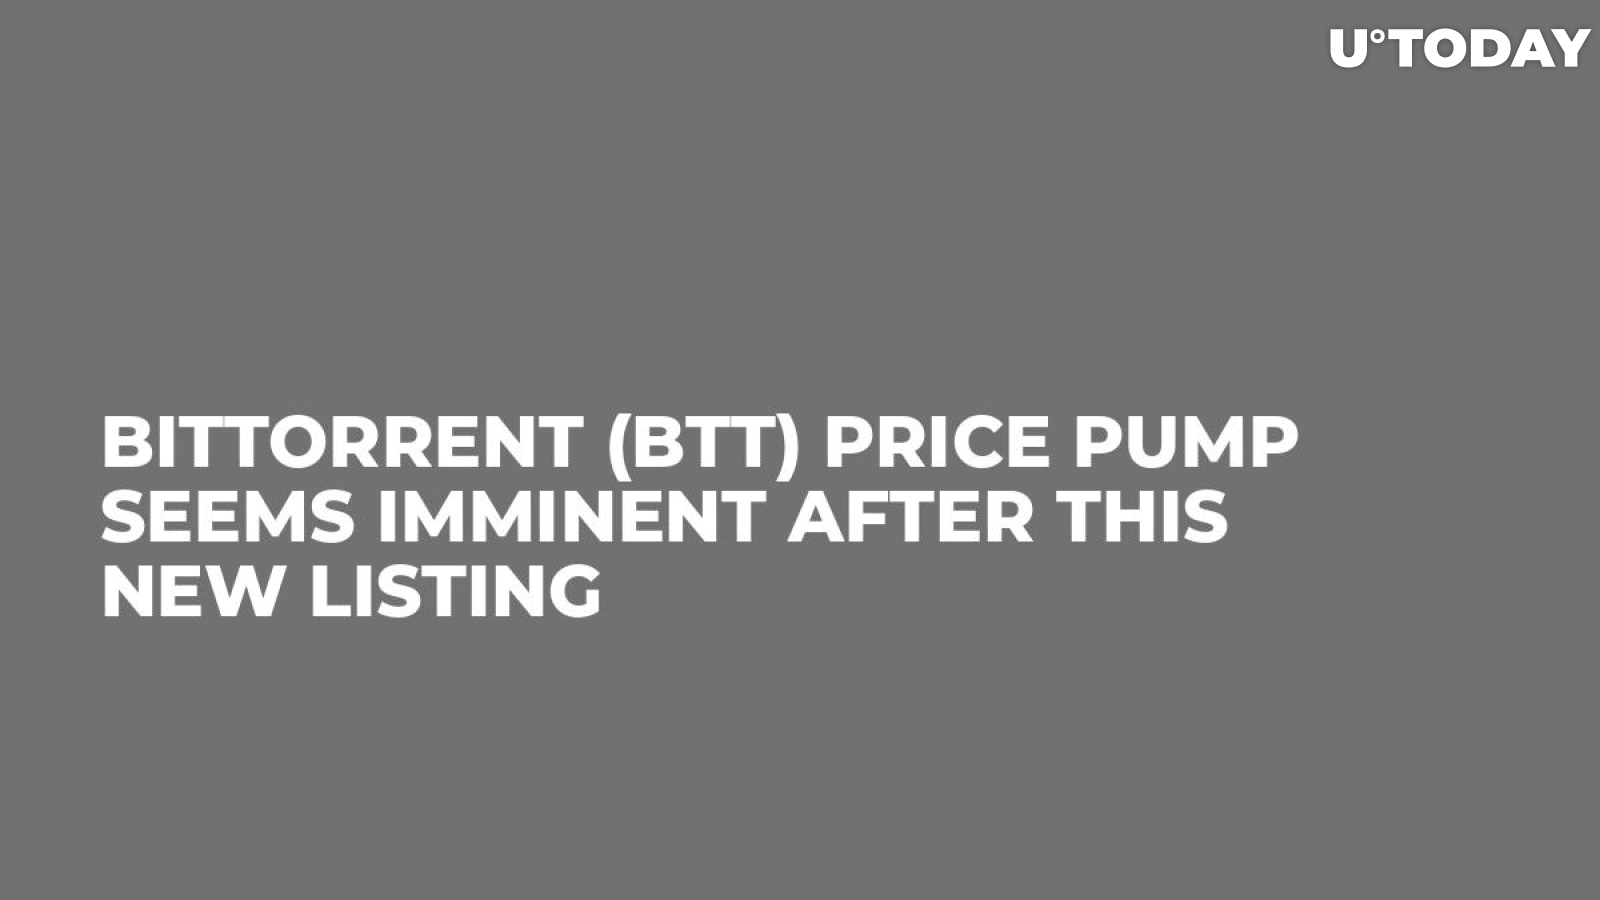 Btt price